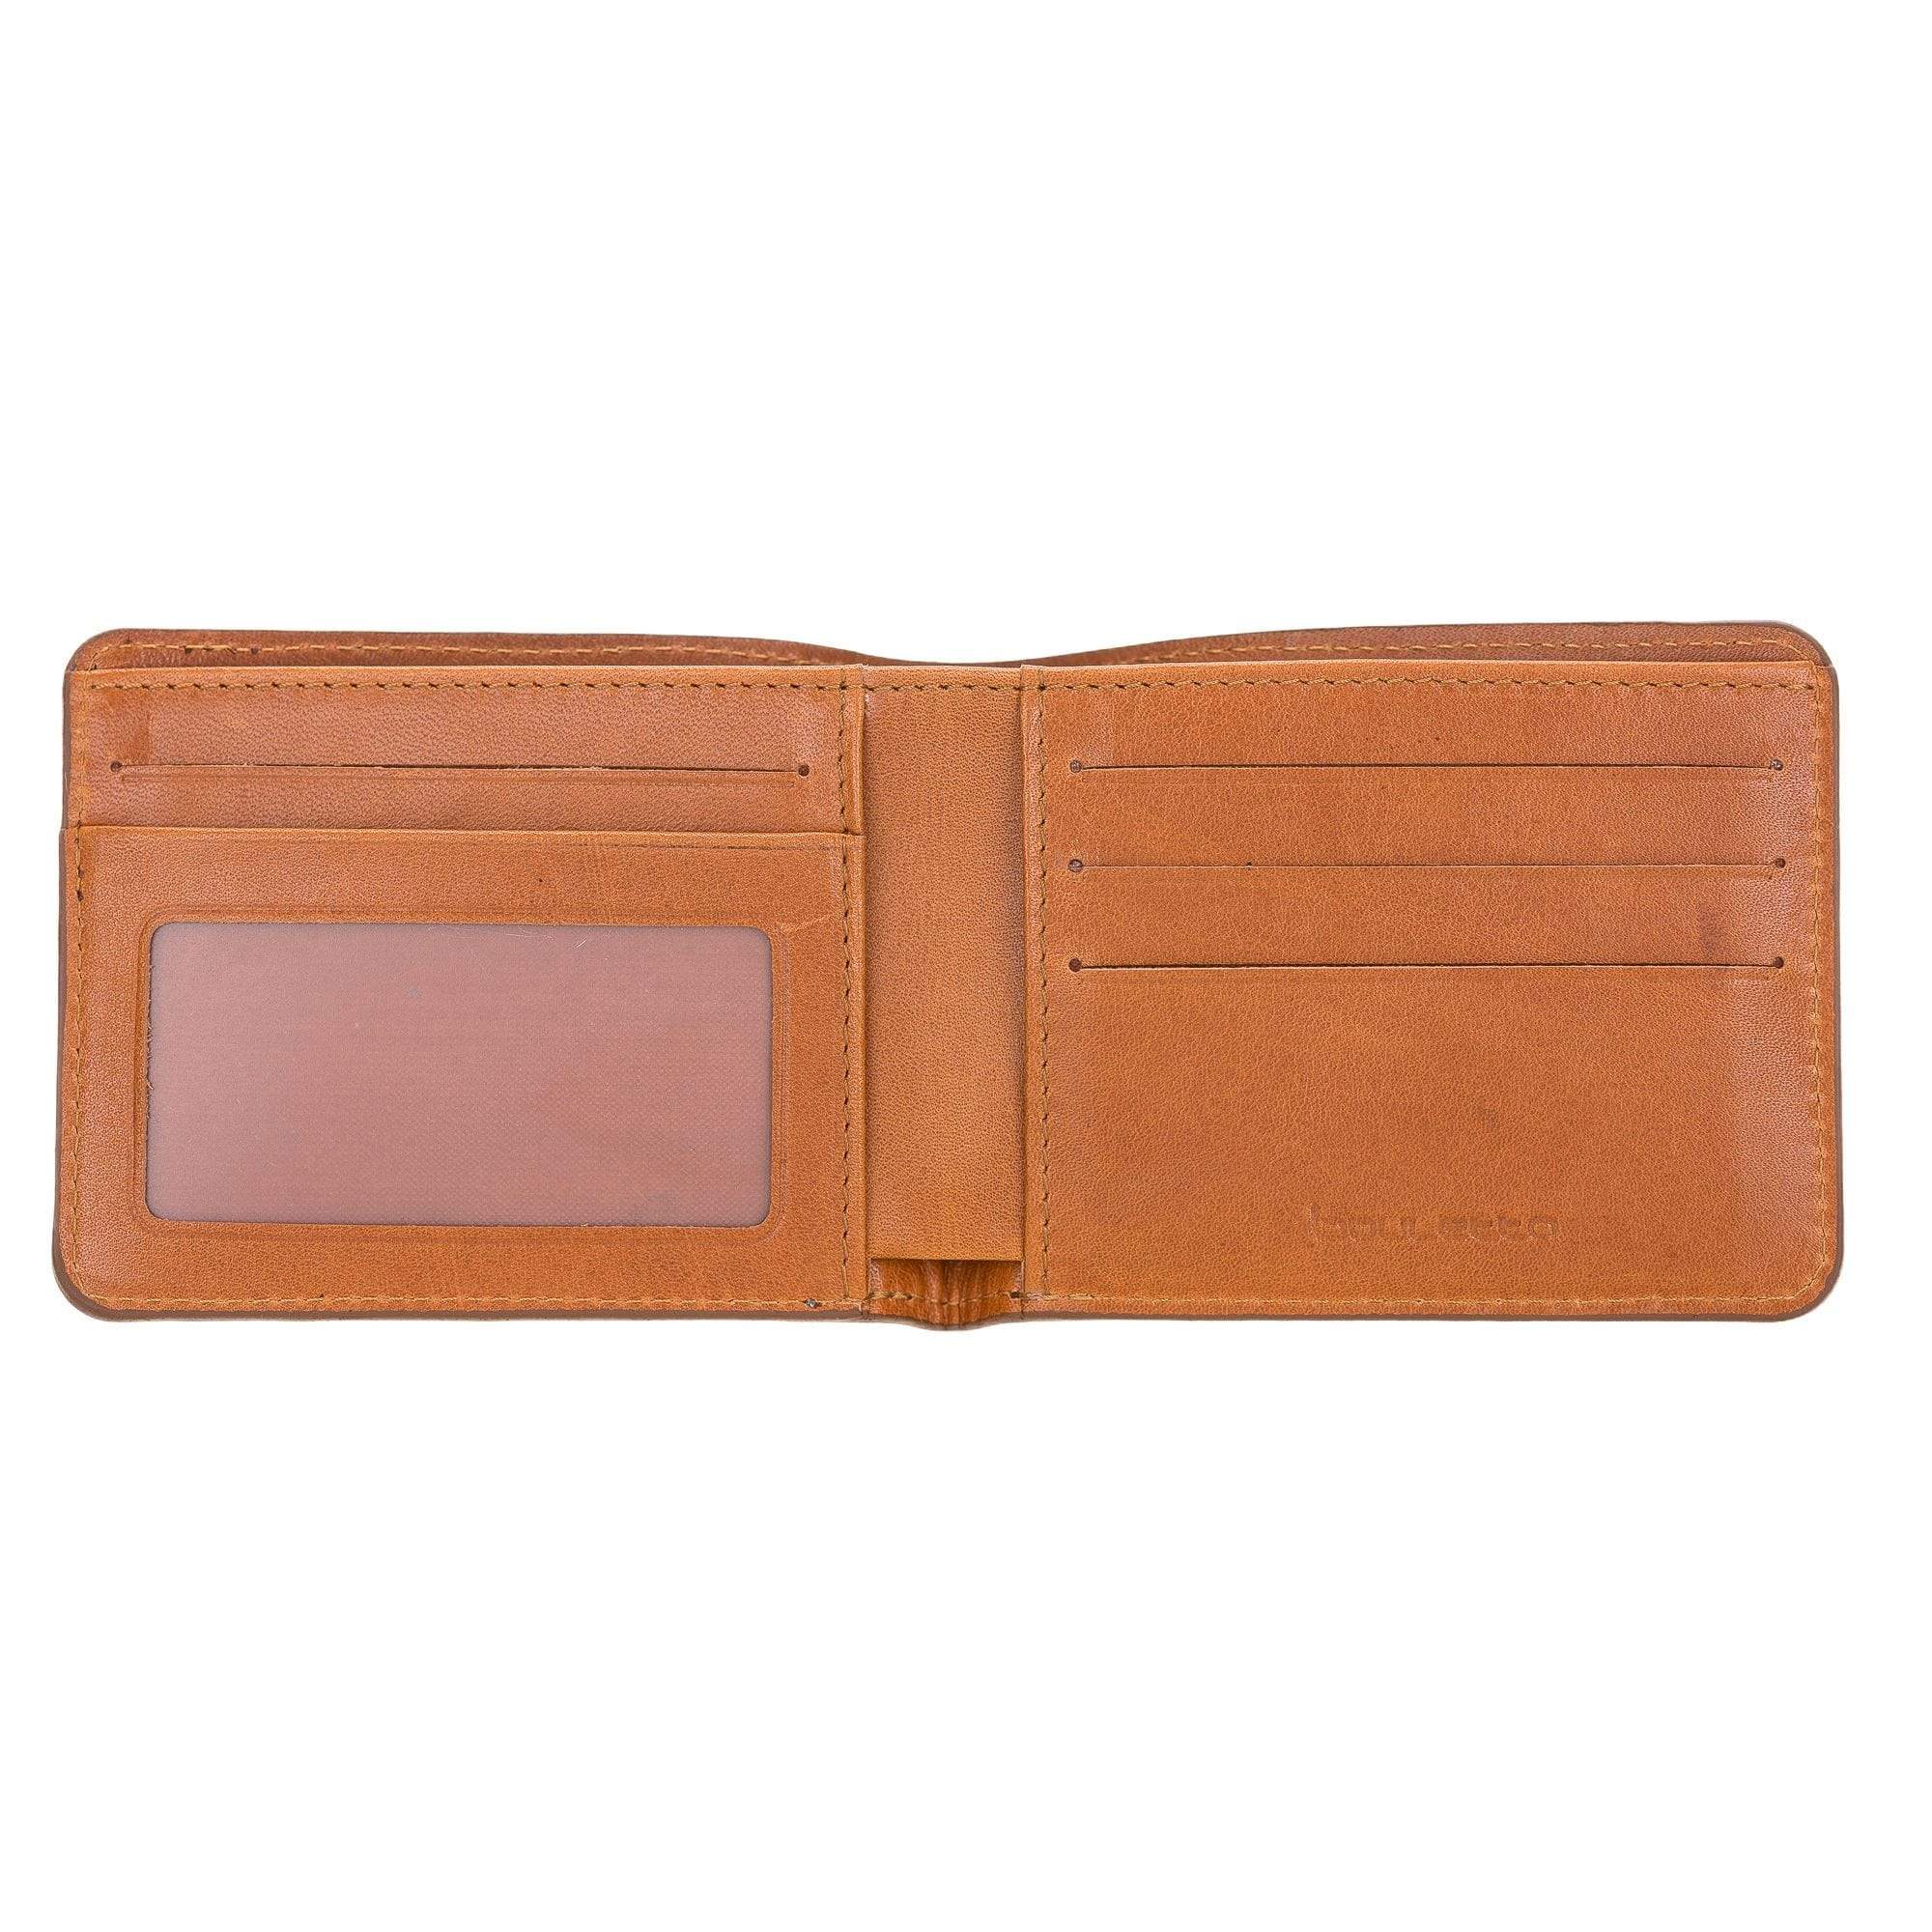 Wallet Pier Leather Men Wallet - Rustic Tan with Effect Bouletta Shop